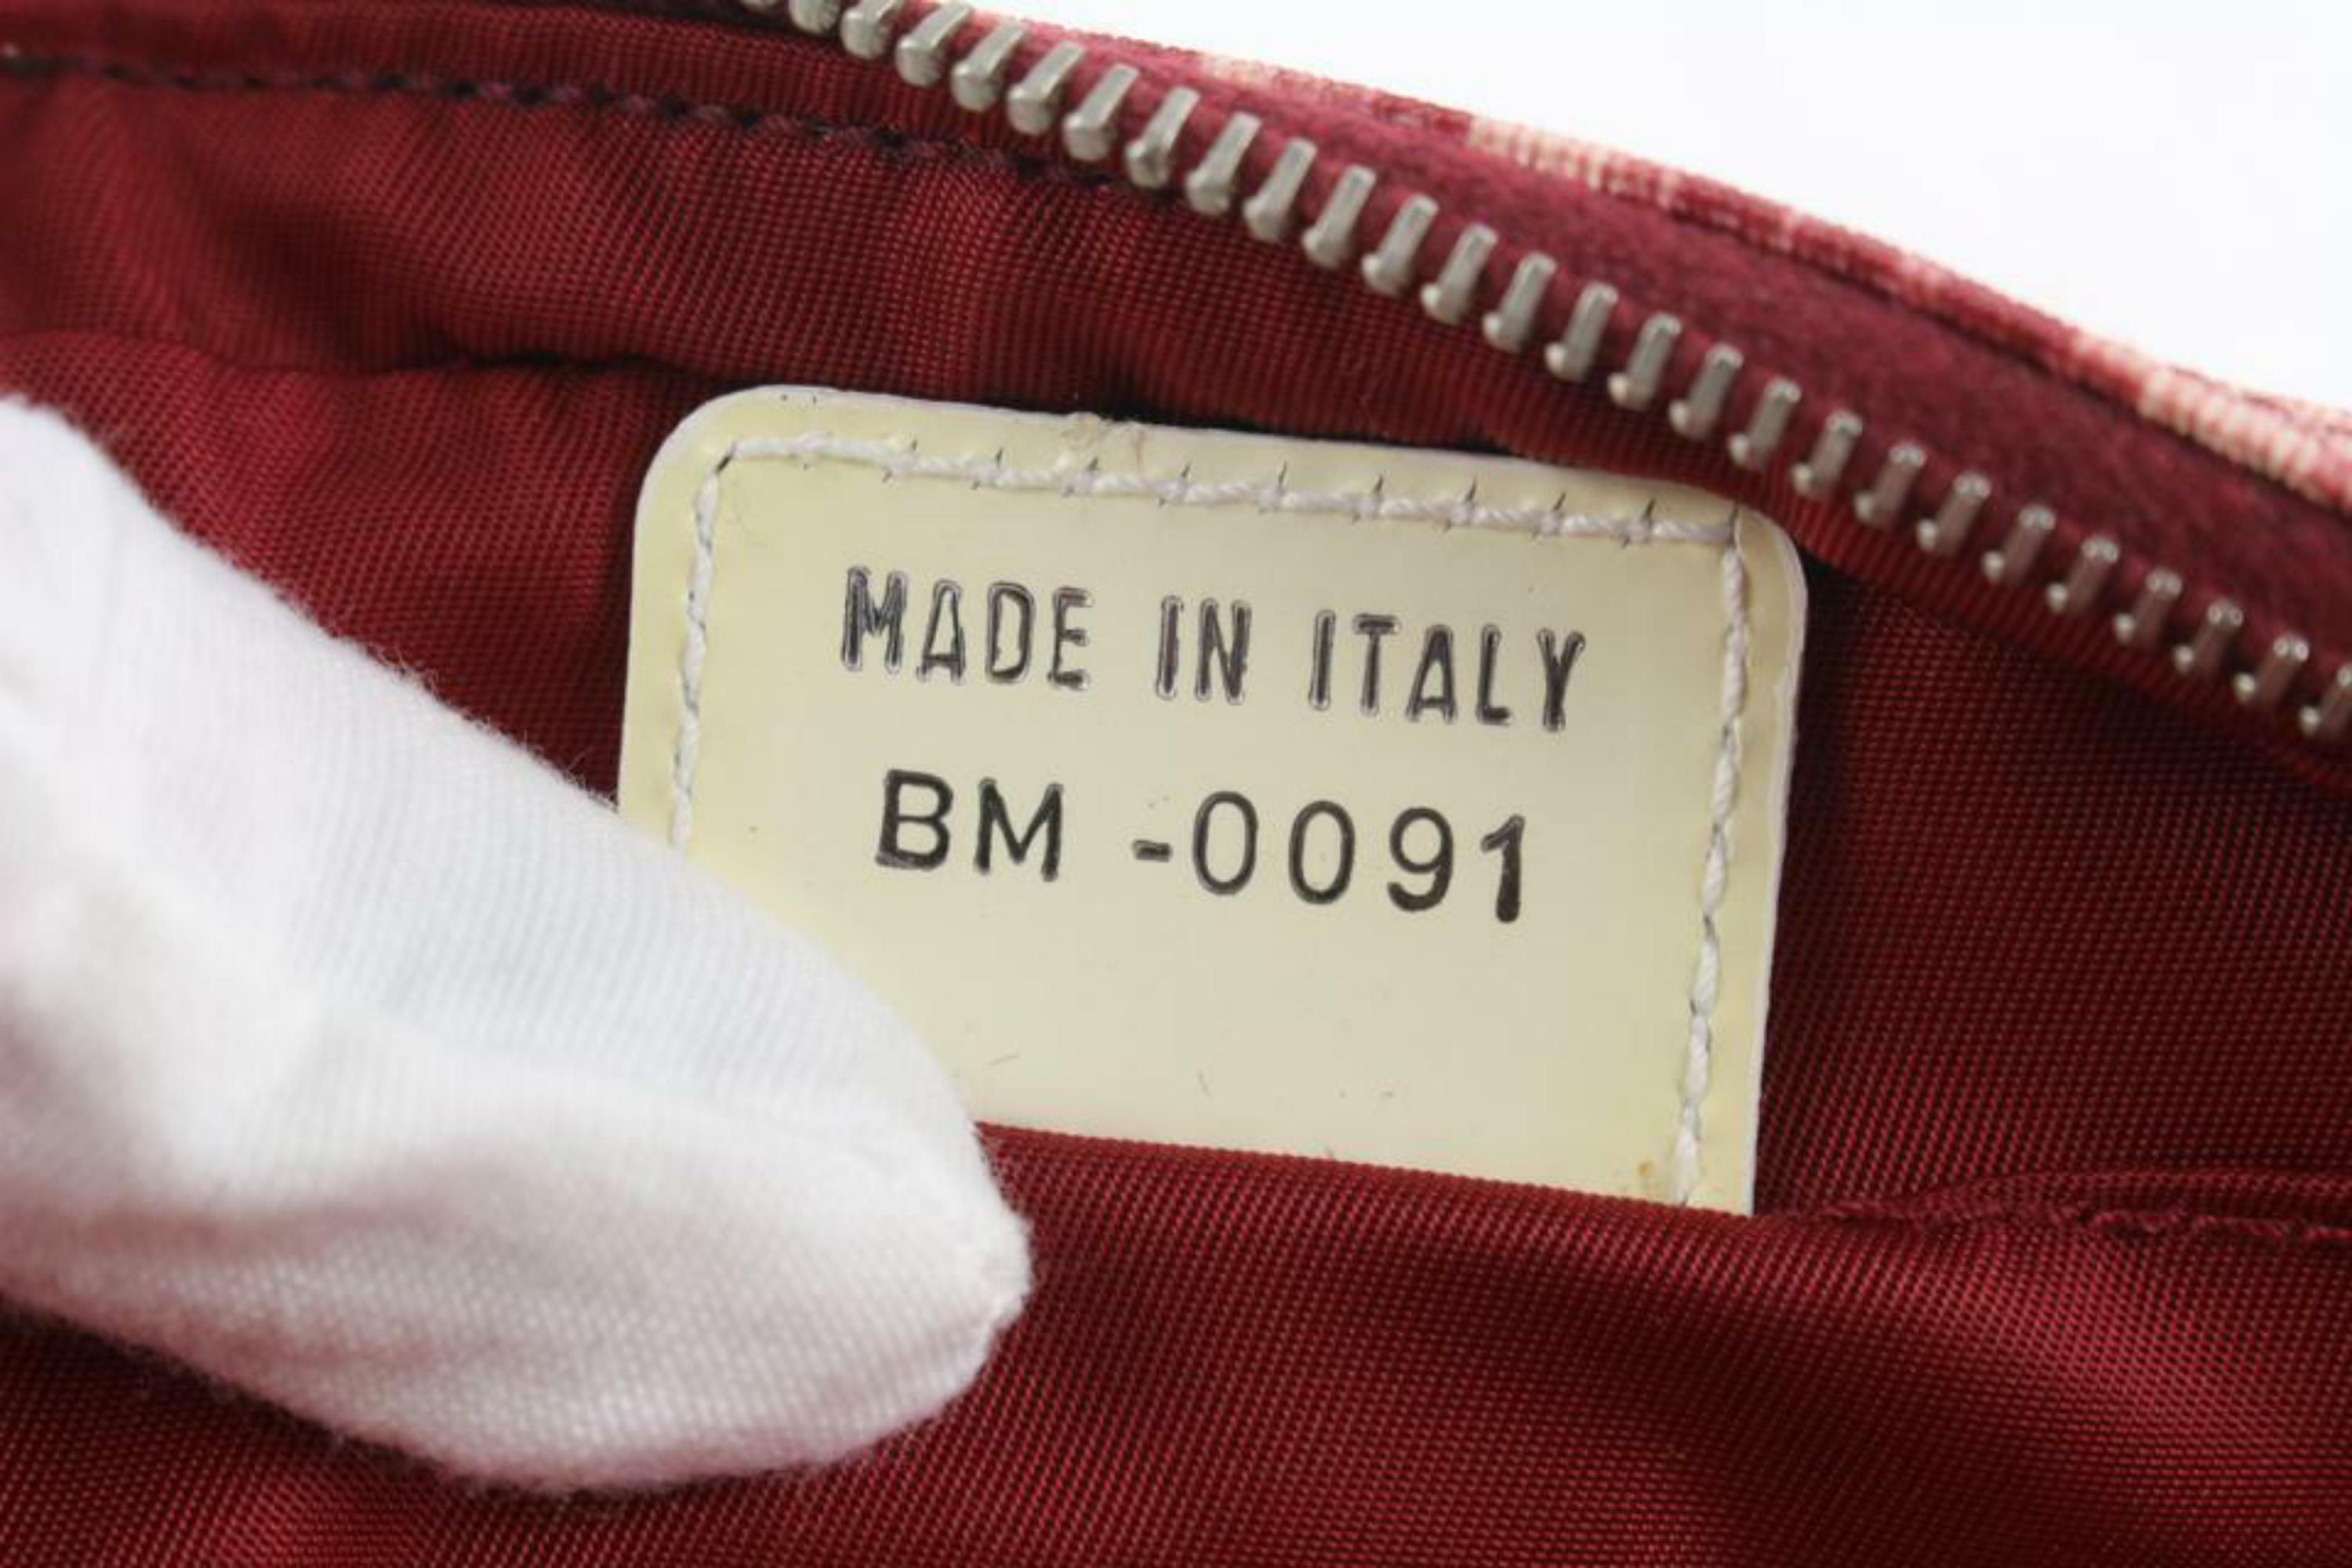 Dior Burgundy Monogram Trotter Girly Chic Pochette Shoulder Bag 5d119
Date Code/Serial Number: BM-0091 
Made In: Italy
Measurements: Length: 8.5 